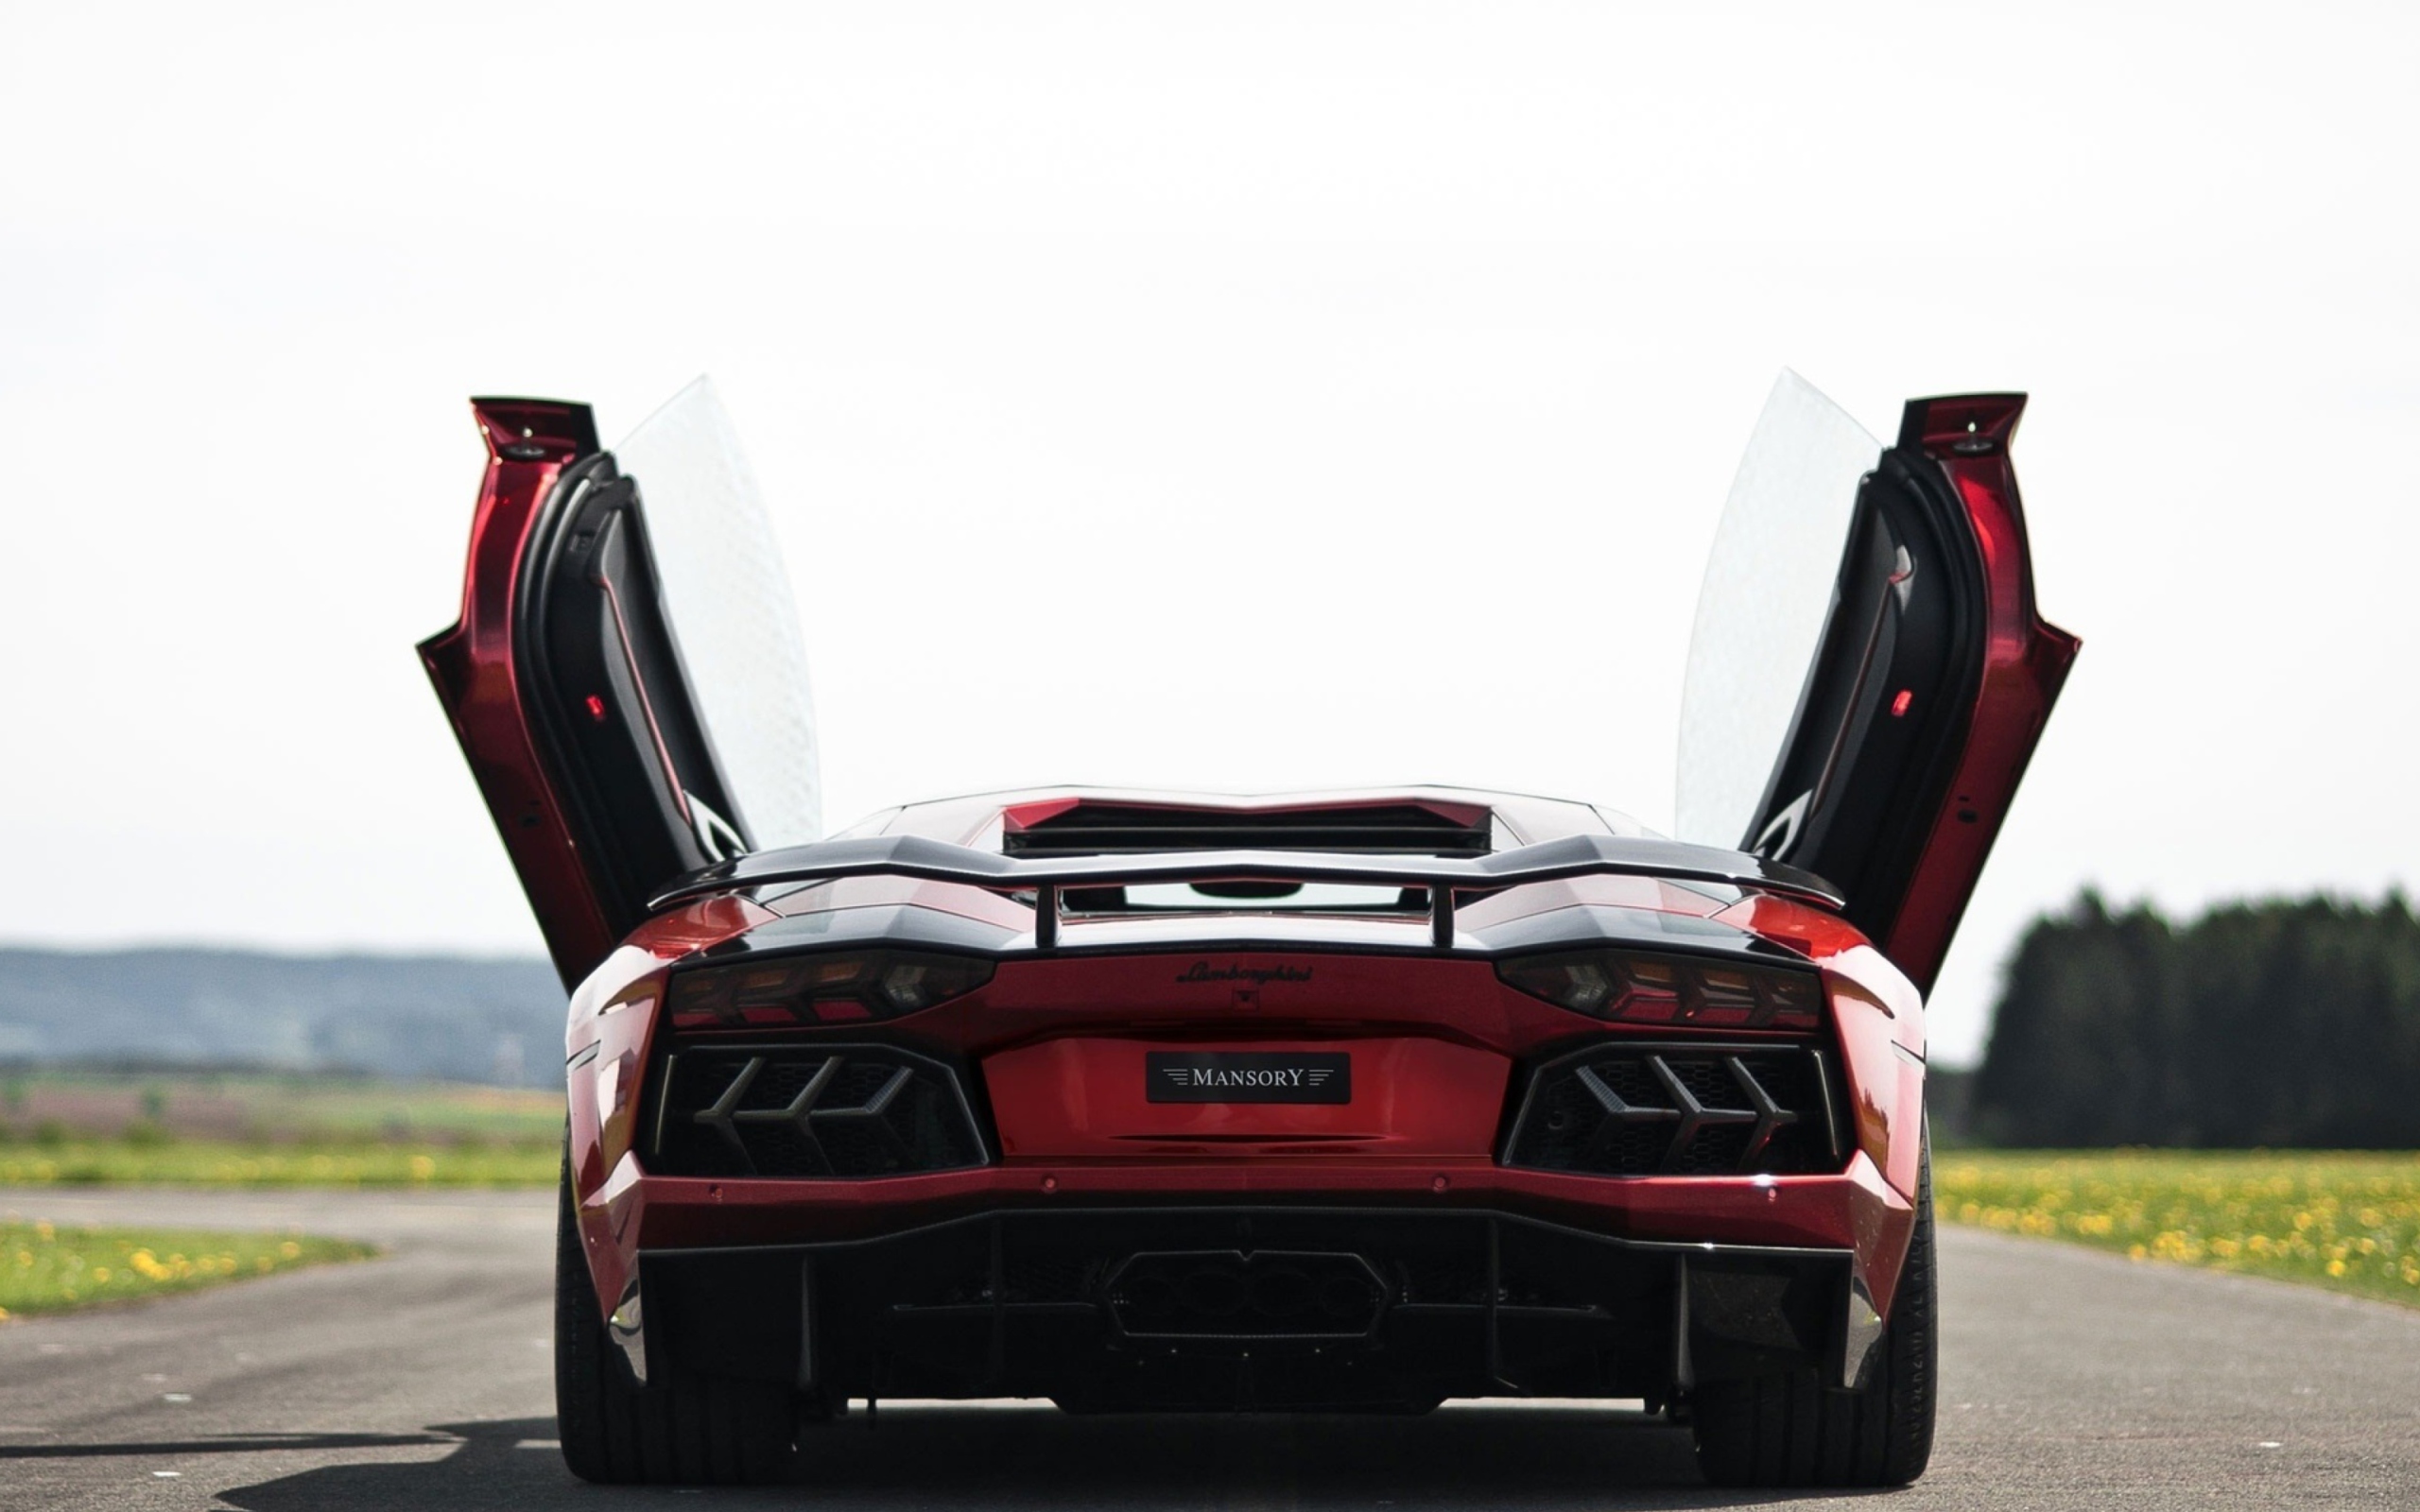 Das Lamborghini Aventador Wallpaper 2560x1600